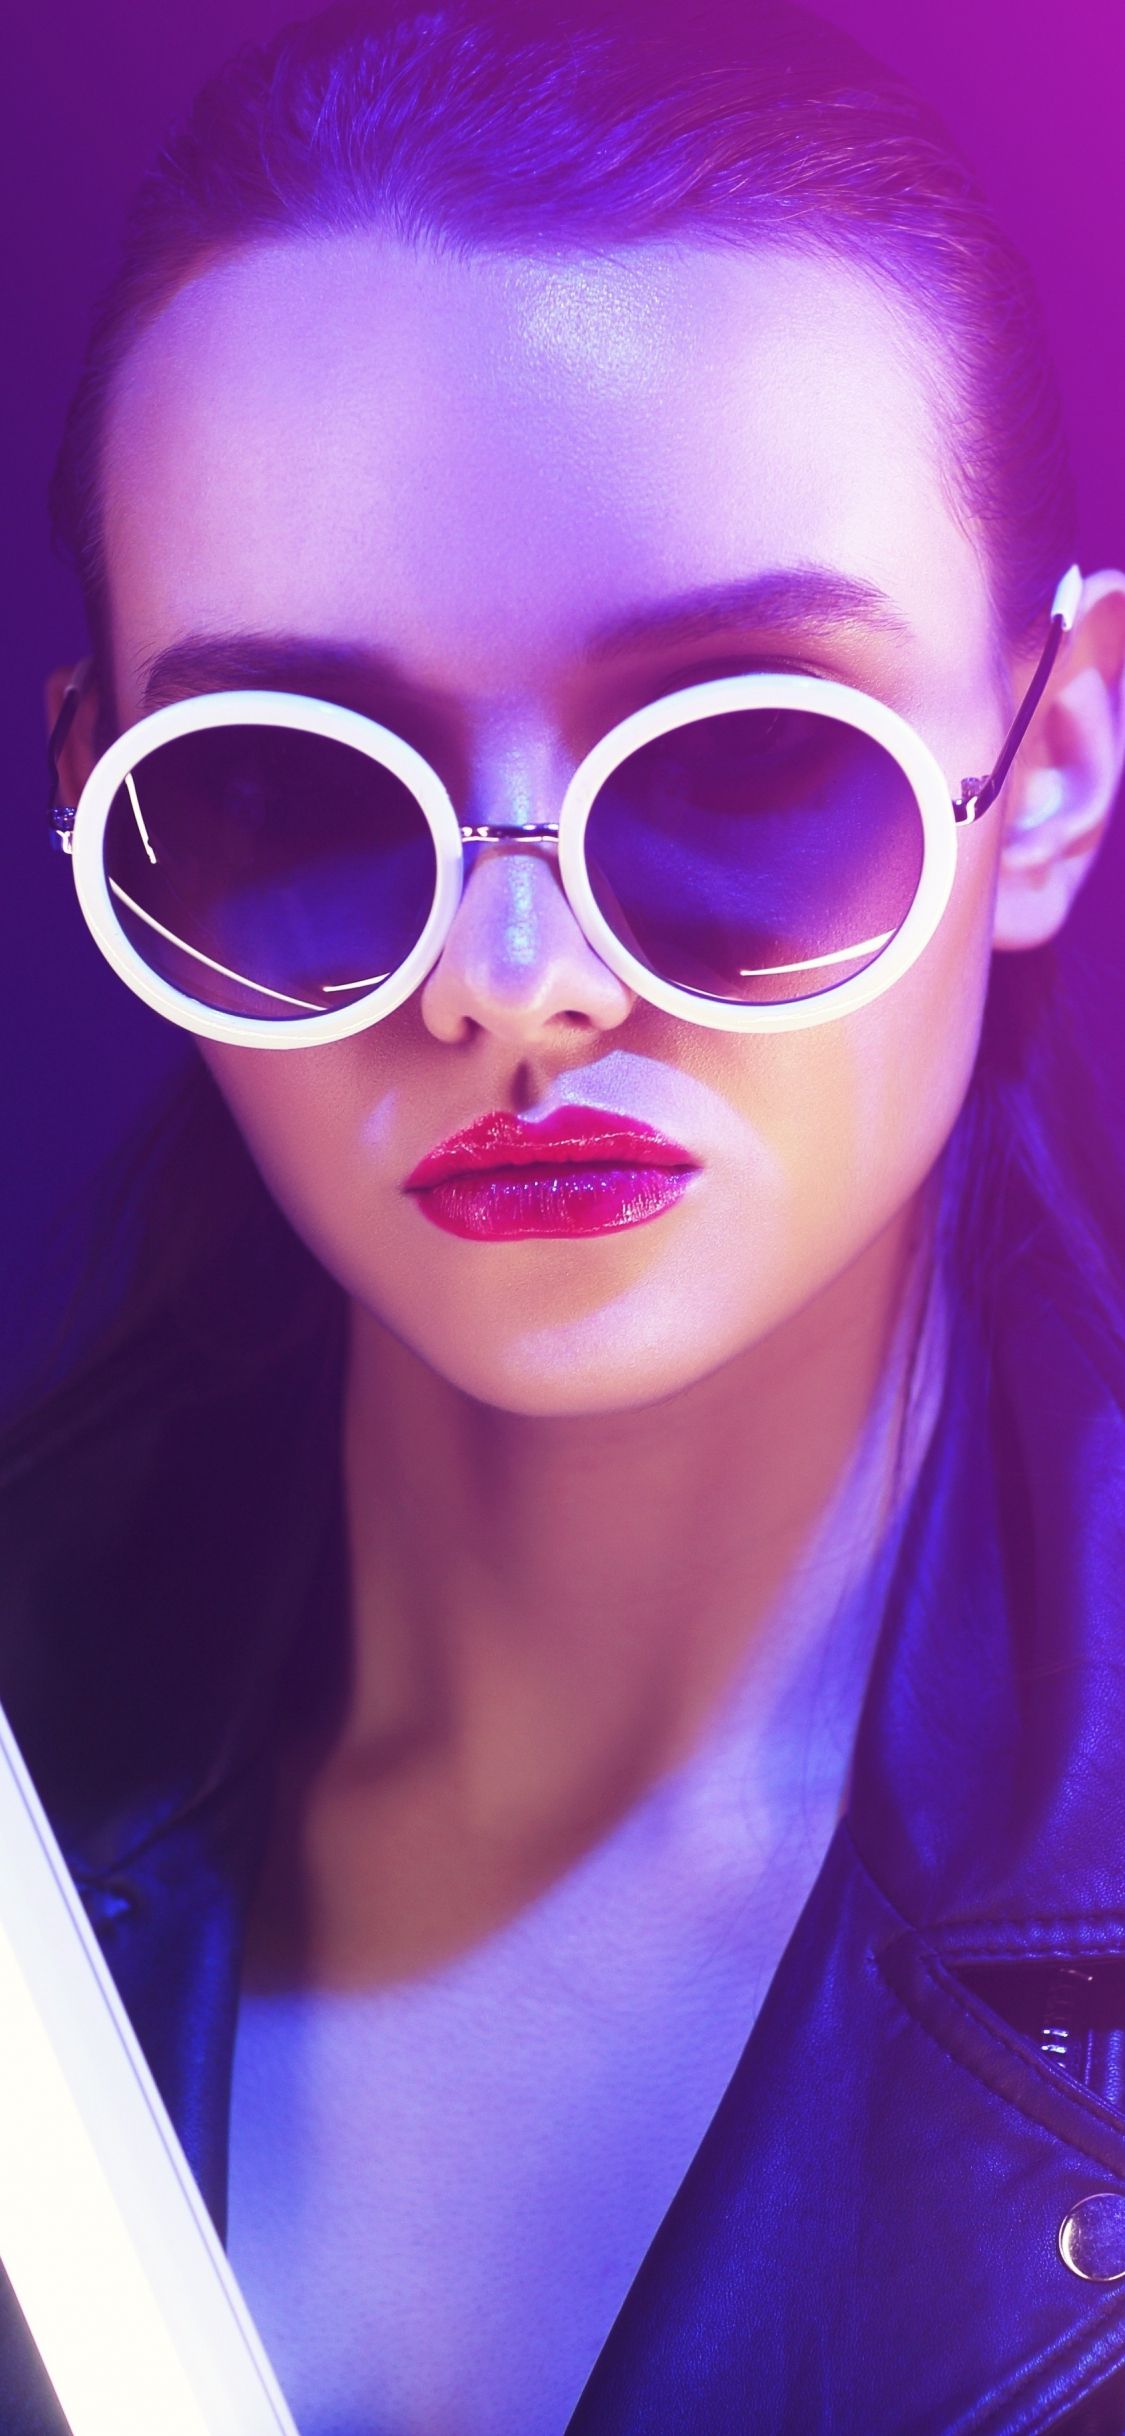 Download 1125x2436 wallpaper sunglasses, woman model, neon lights